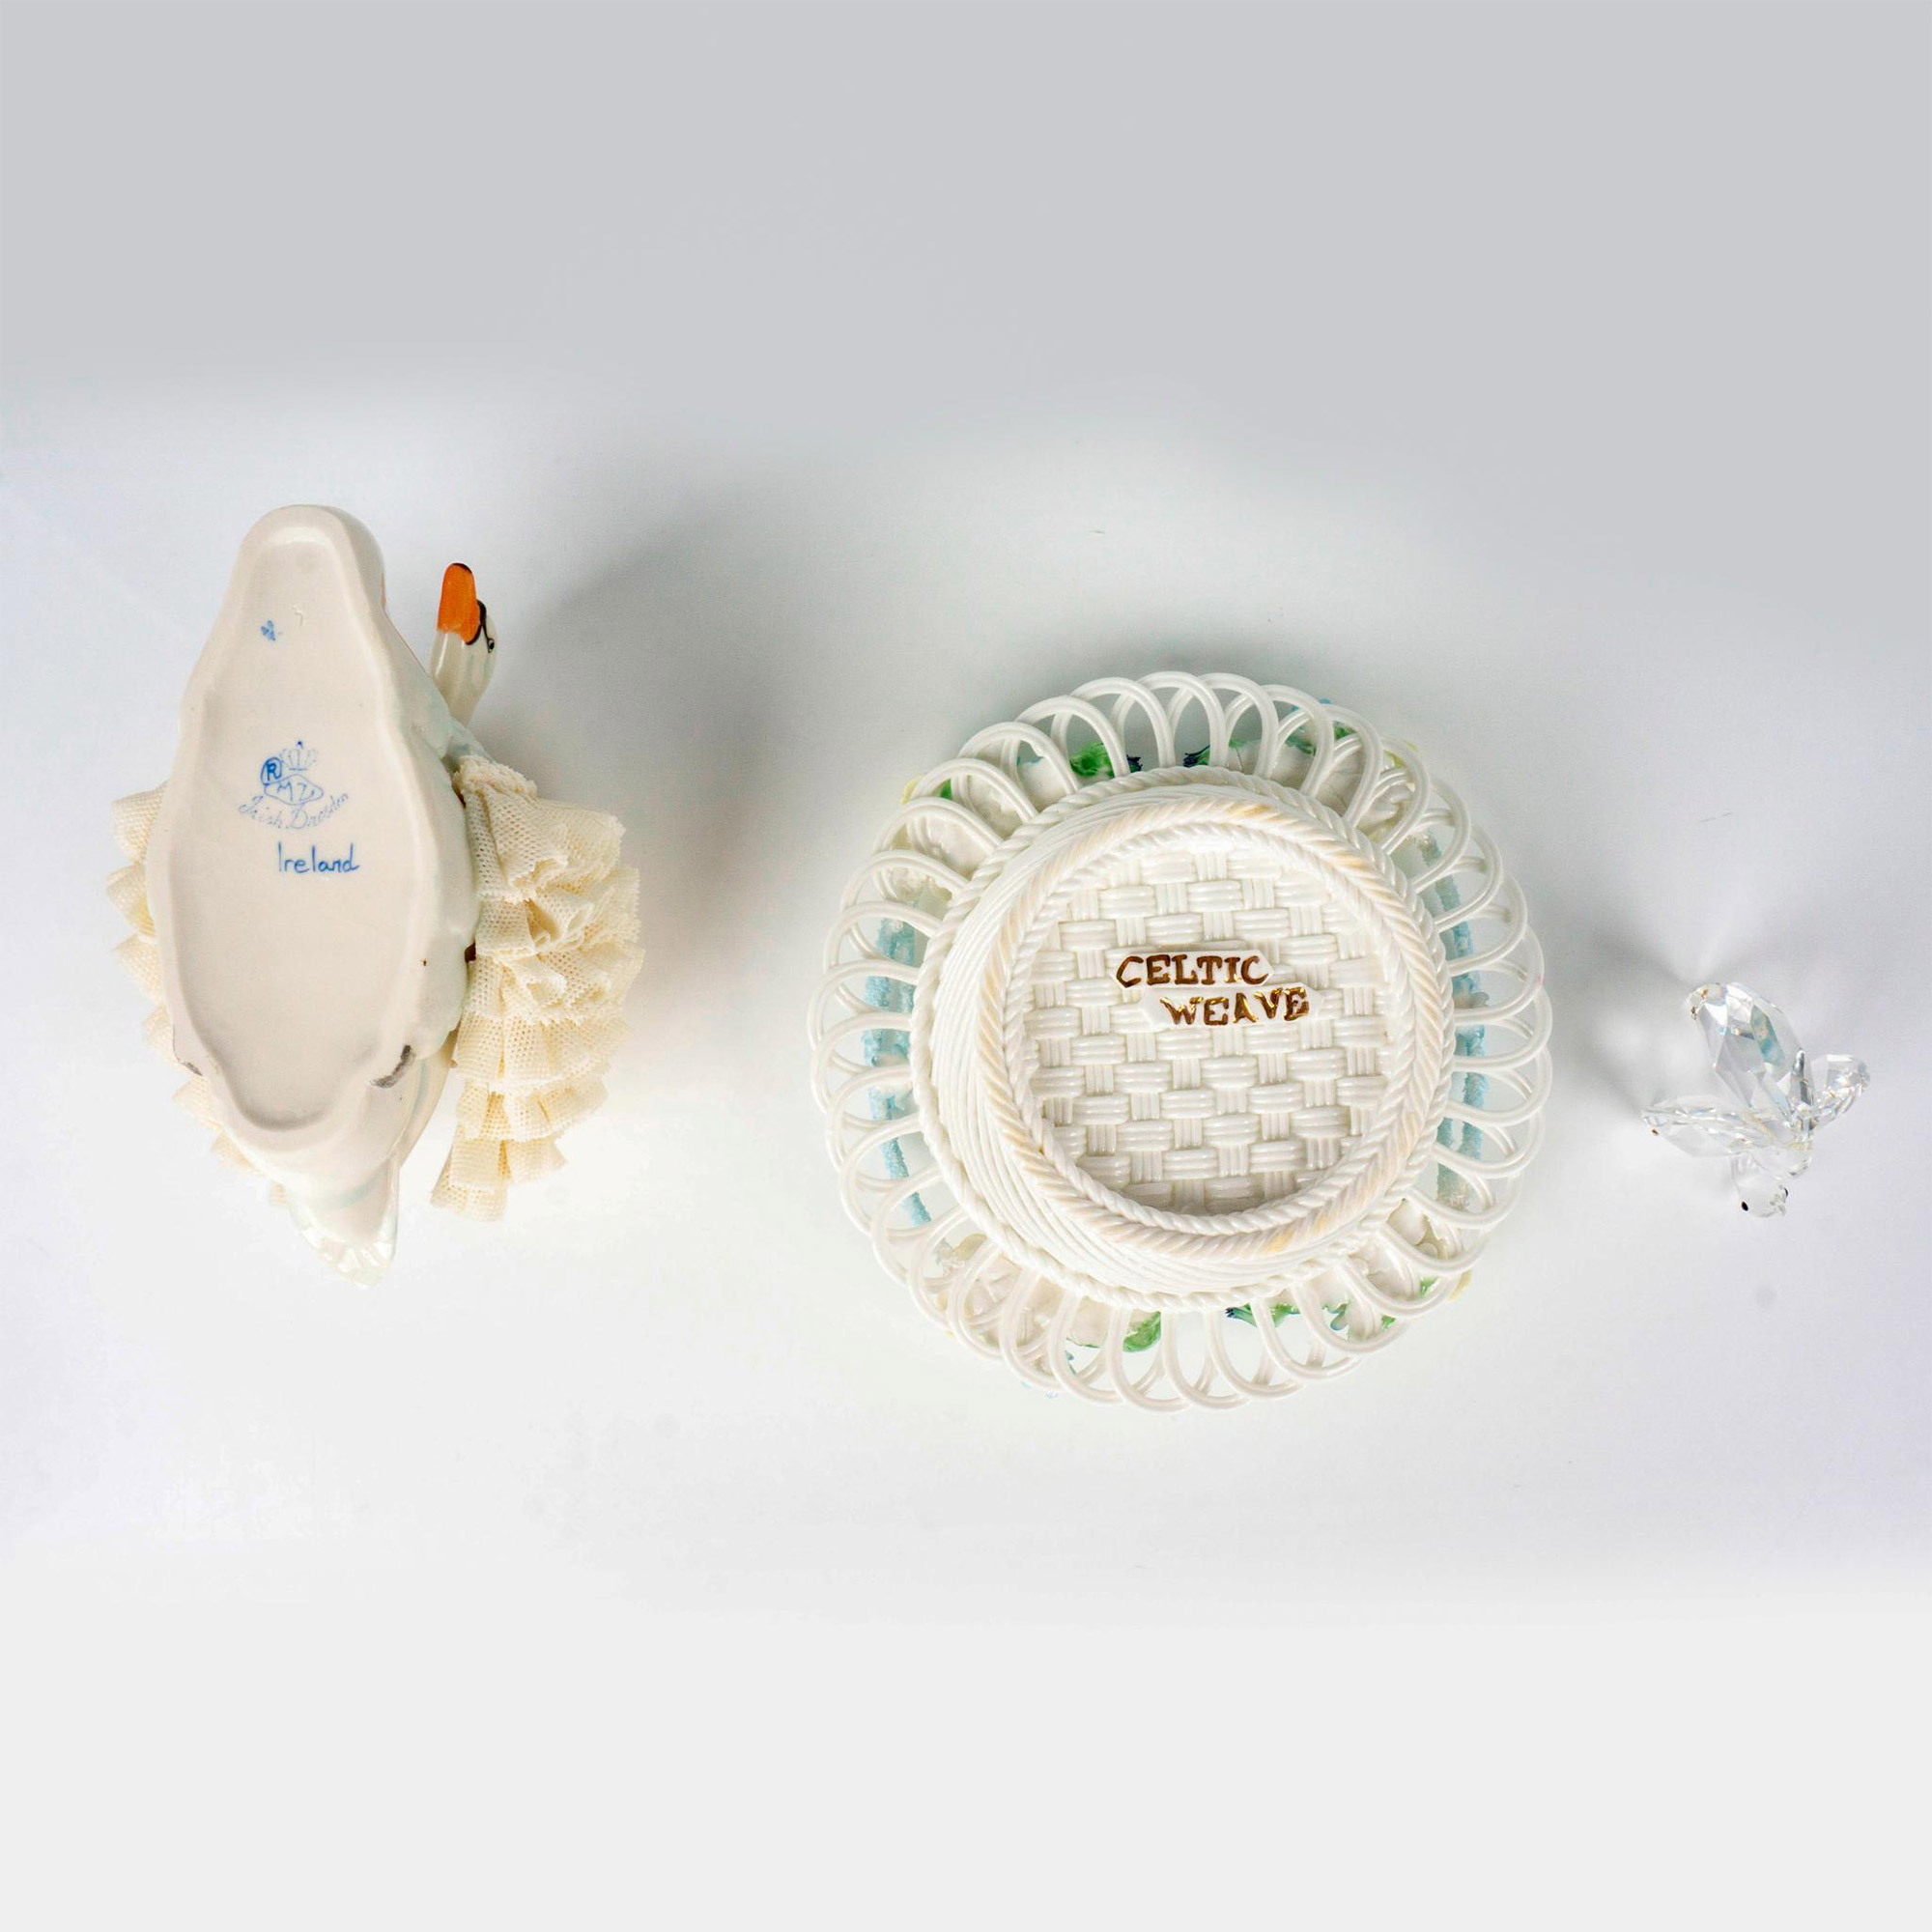 3pc Vintage Porcelain and Glass Decor - Image 3 of 3